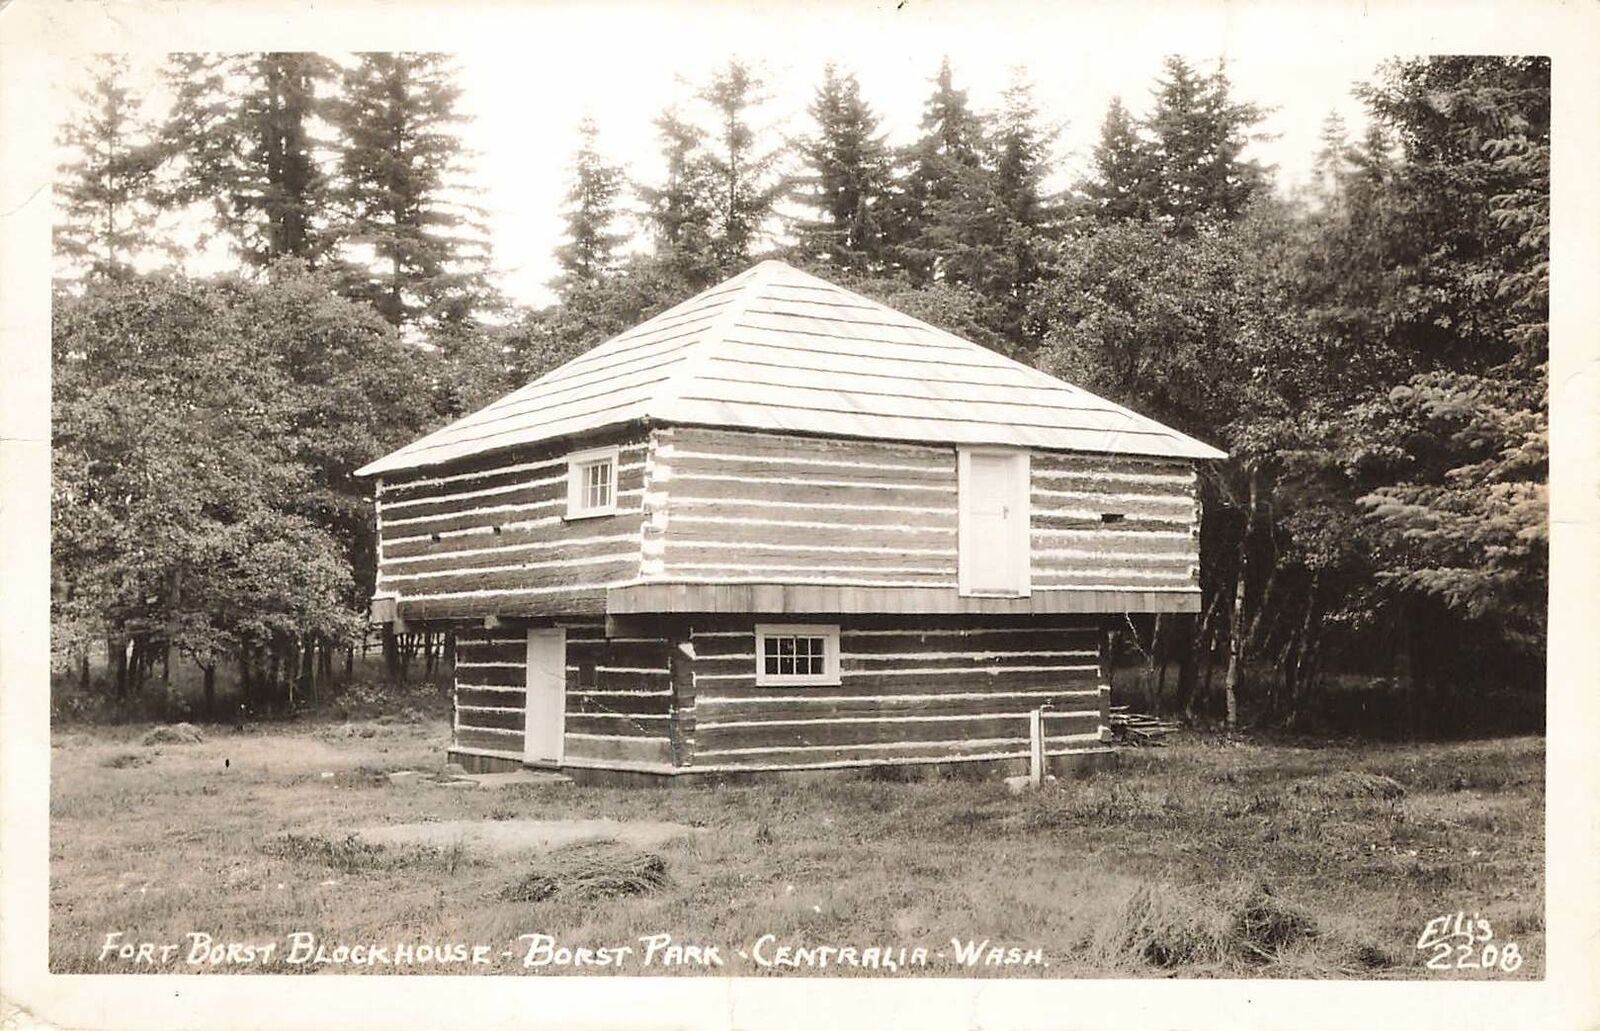 Vintage 1954 RPPC Postcard Fort Borst Blackhouse Park Centralia Washington real 